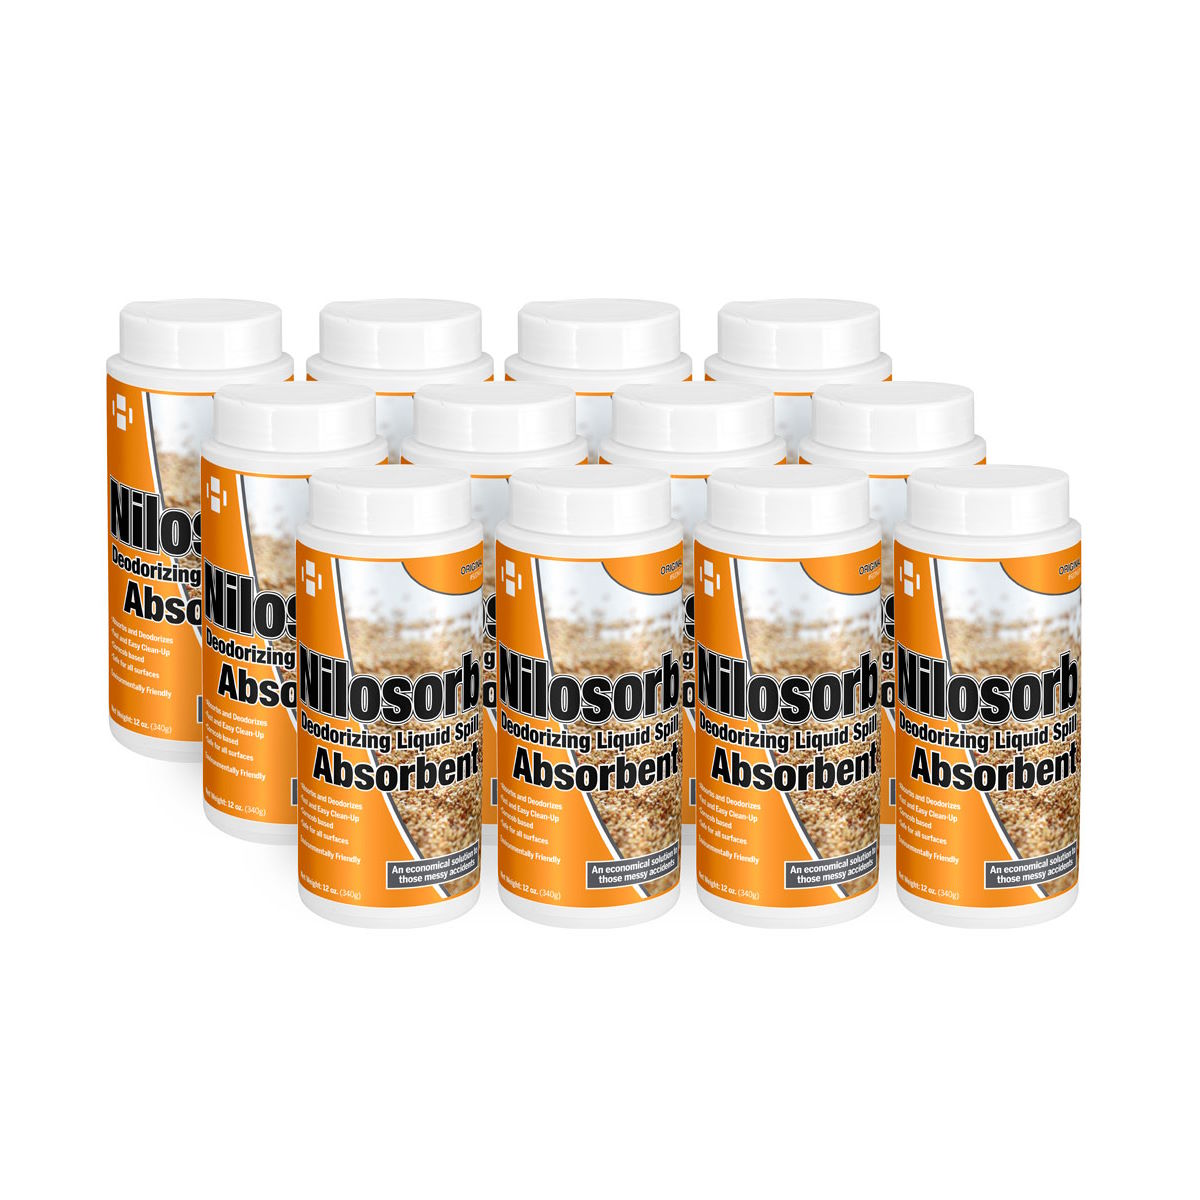 Nilodor® #8NLC Nilogel Liquid Absorbent & Urine Clean Up Kit (12